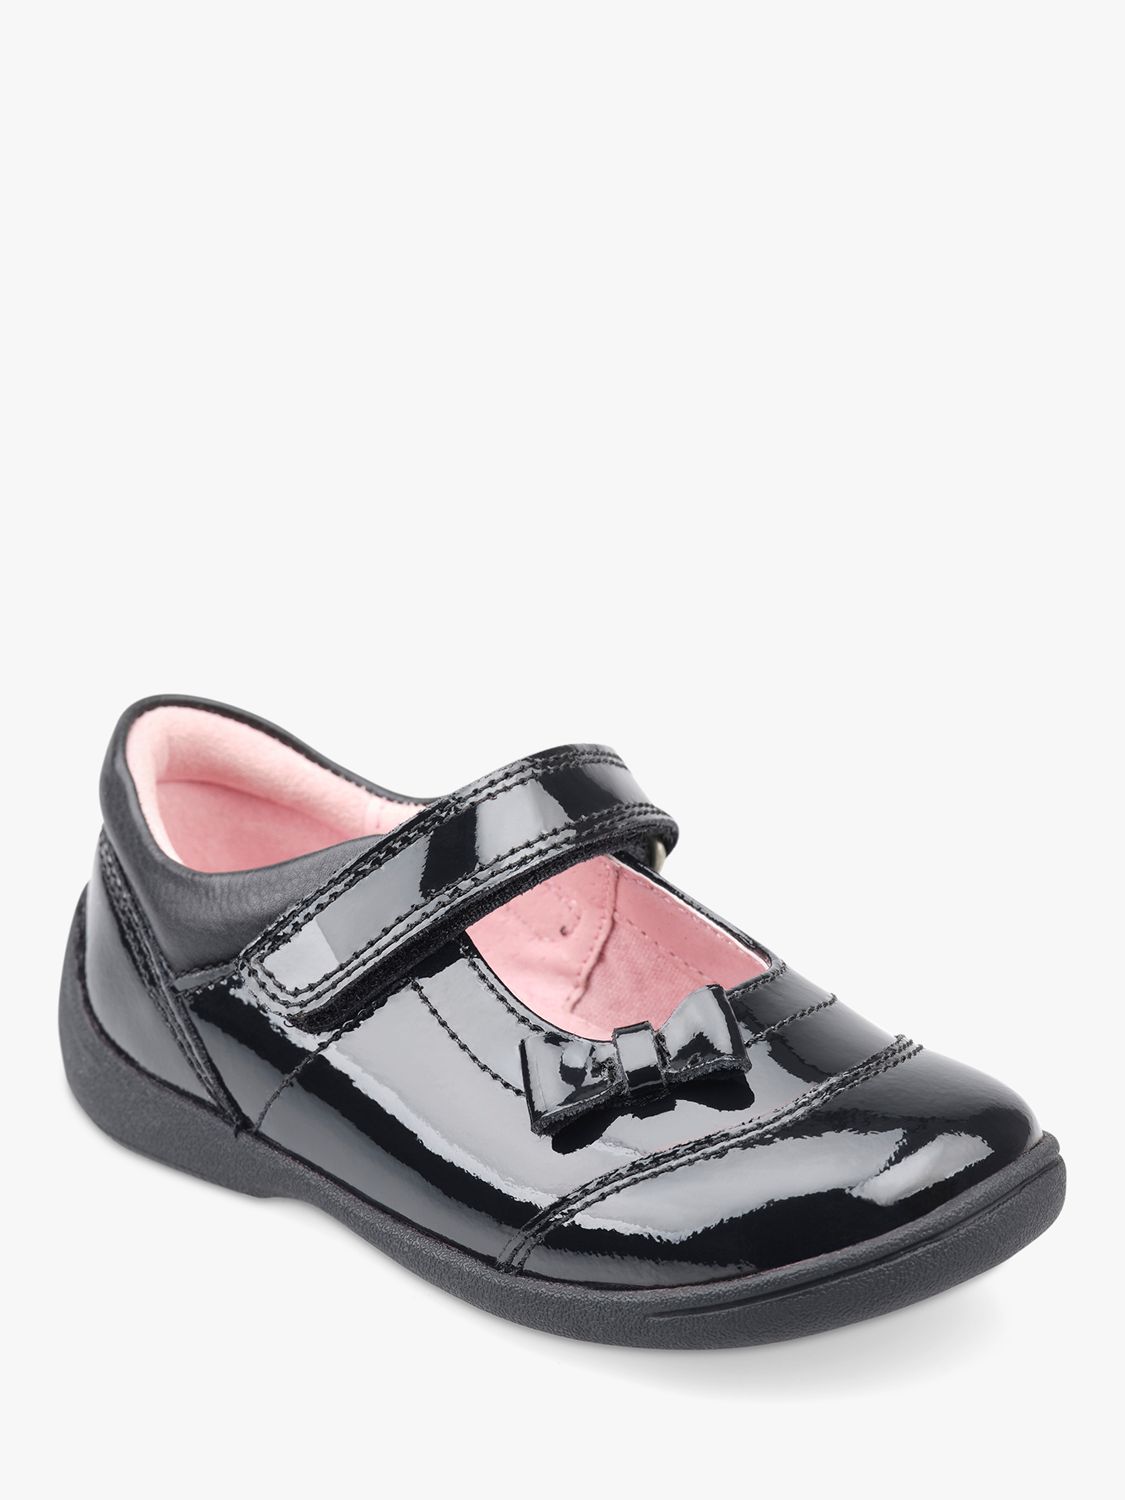 Start-Rite Kids' Twizzle Patent Shoes, Black, 8G Jnr